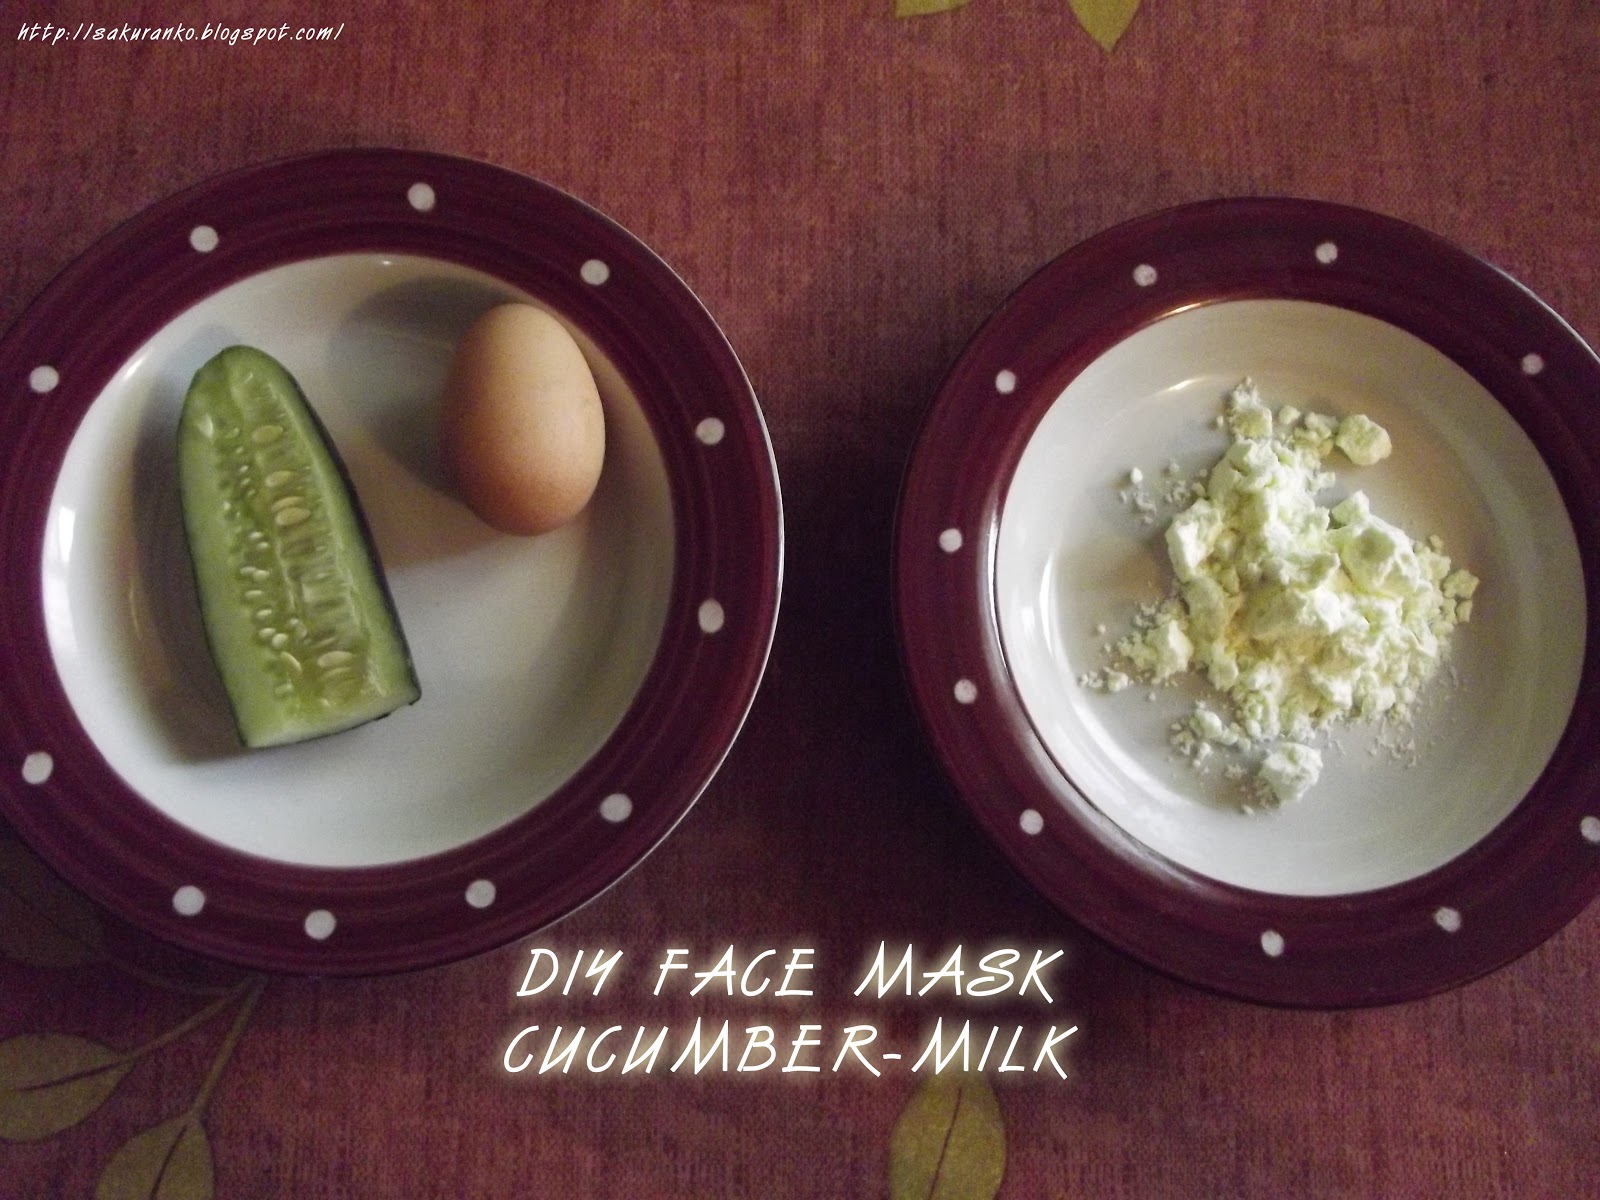 Milk Mask DIY Face korean mask Sakuranko: face diy Cucumber